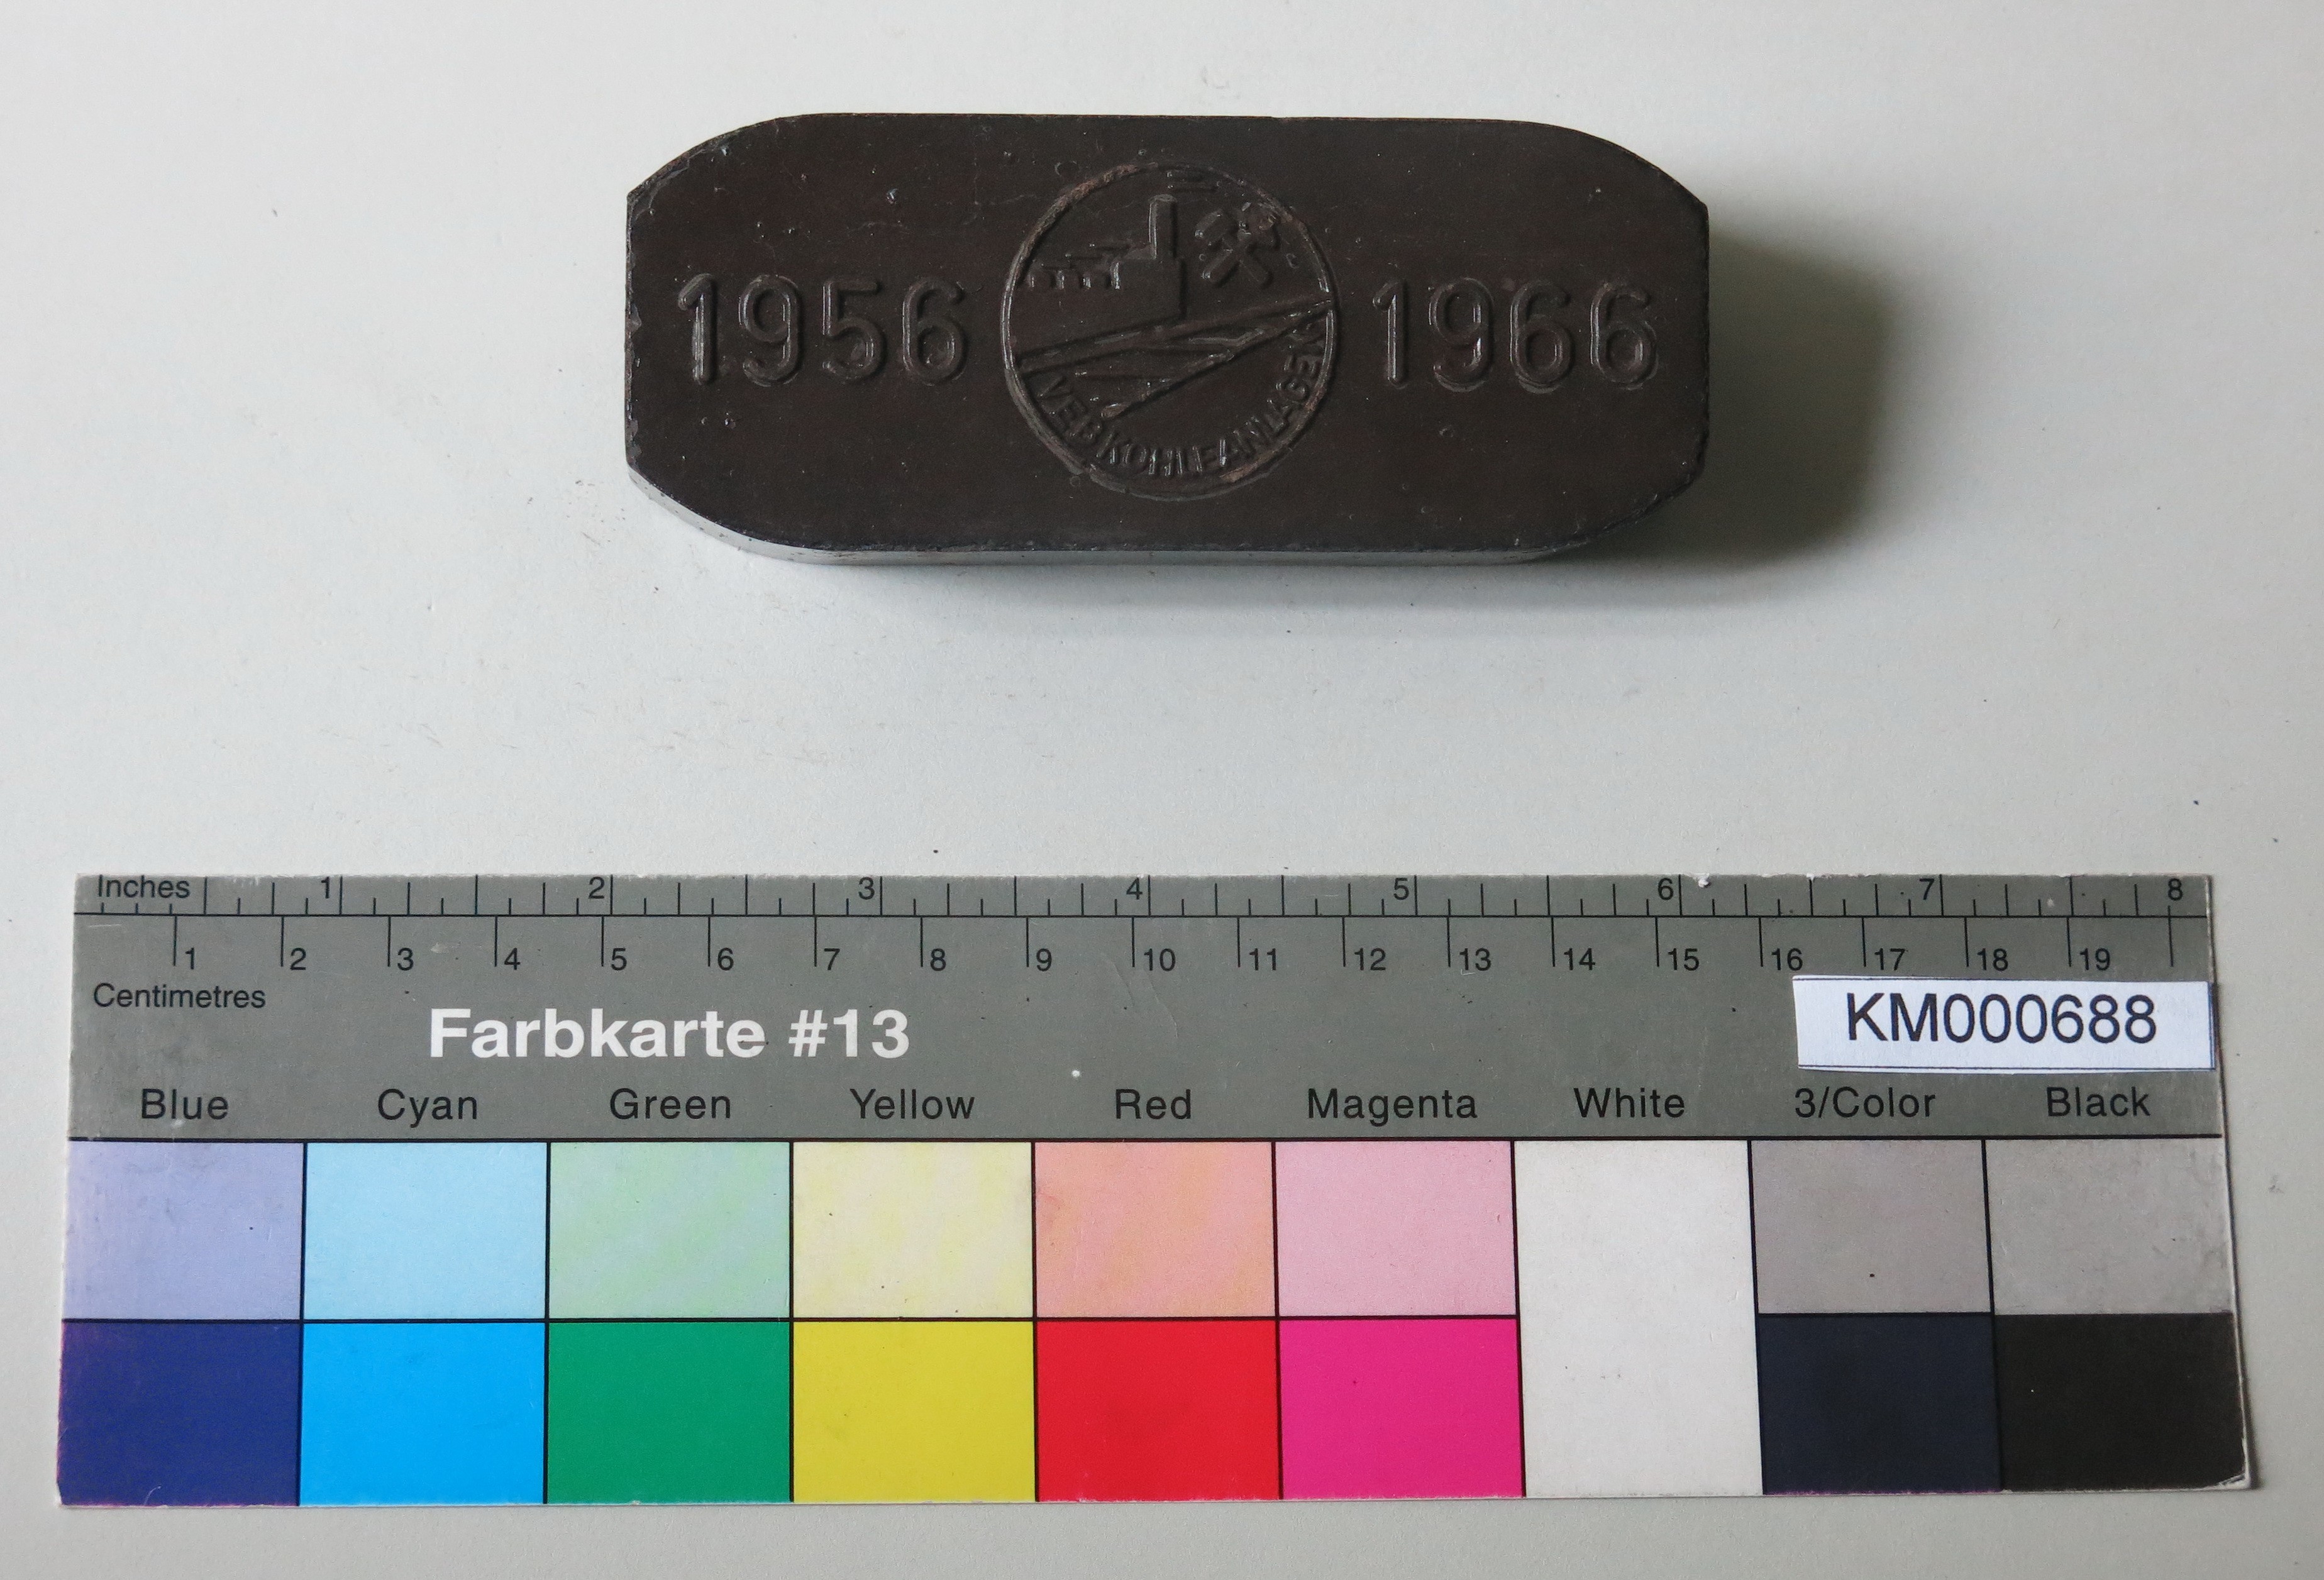 Zierbrikett "1956 1966 VEB KOHLEANLAGEN" (Energiefabrik Knappenrode CC BY-SA)